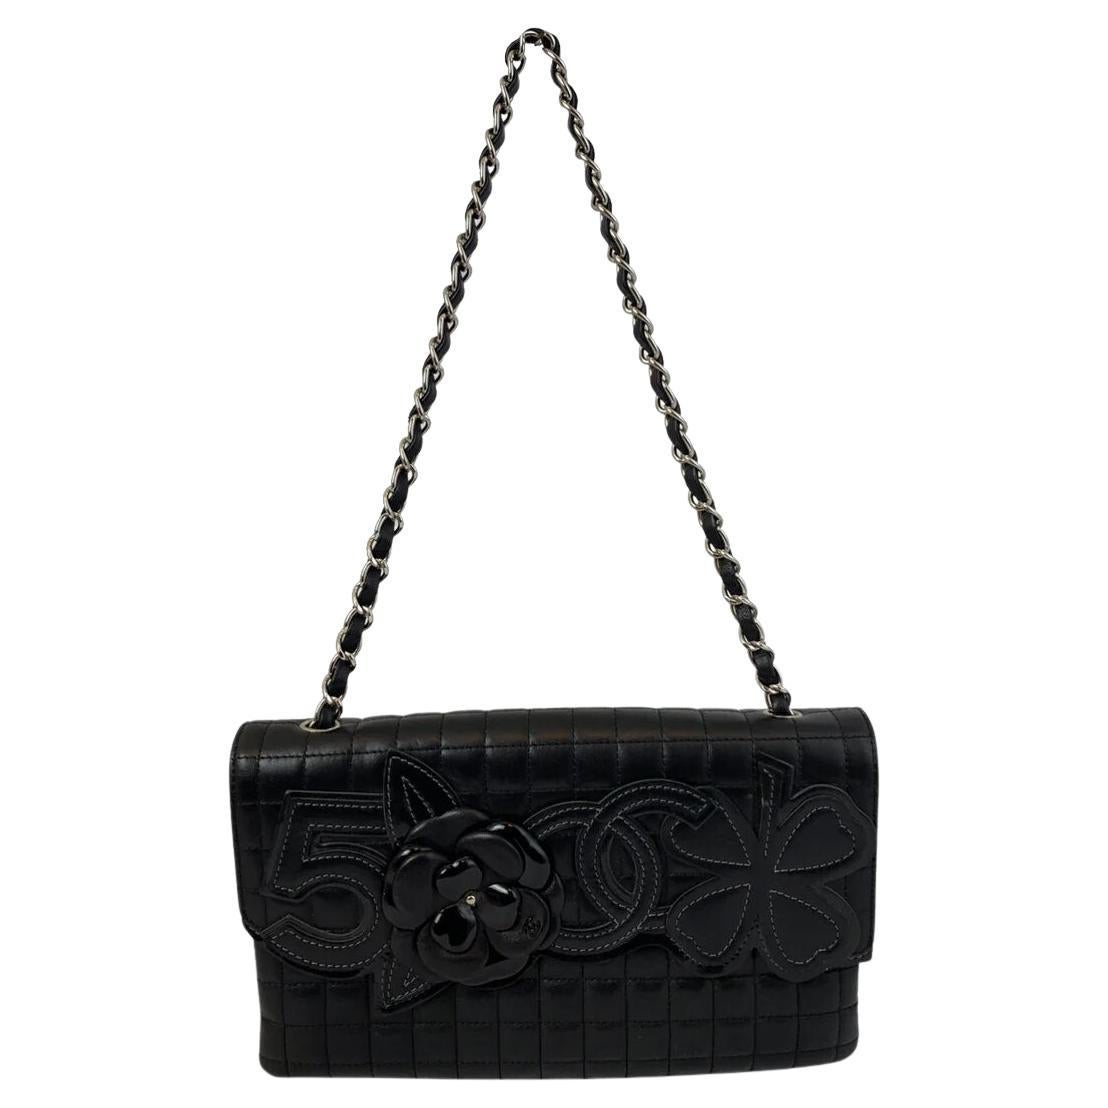 Chanel No. 5 Camellia Flap Bag For Sale